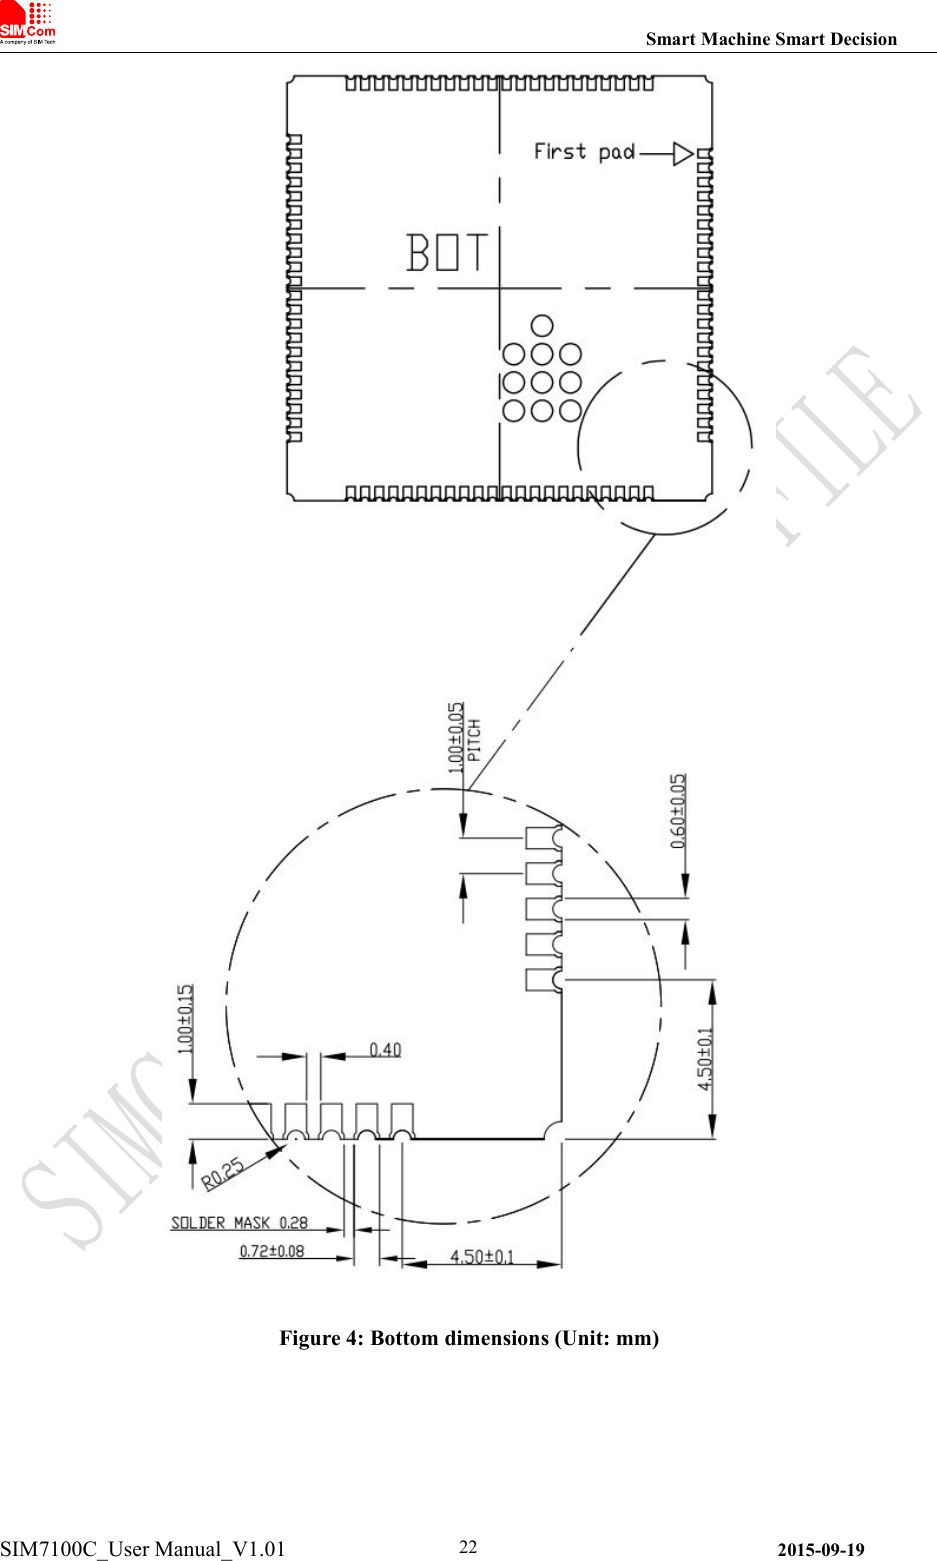 Smart Machine Smart DecisionSIM7100C_User Manual_V1.01 2015-09-1922Figure 4: Bottom dimensions (Unit: mm)